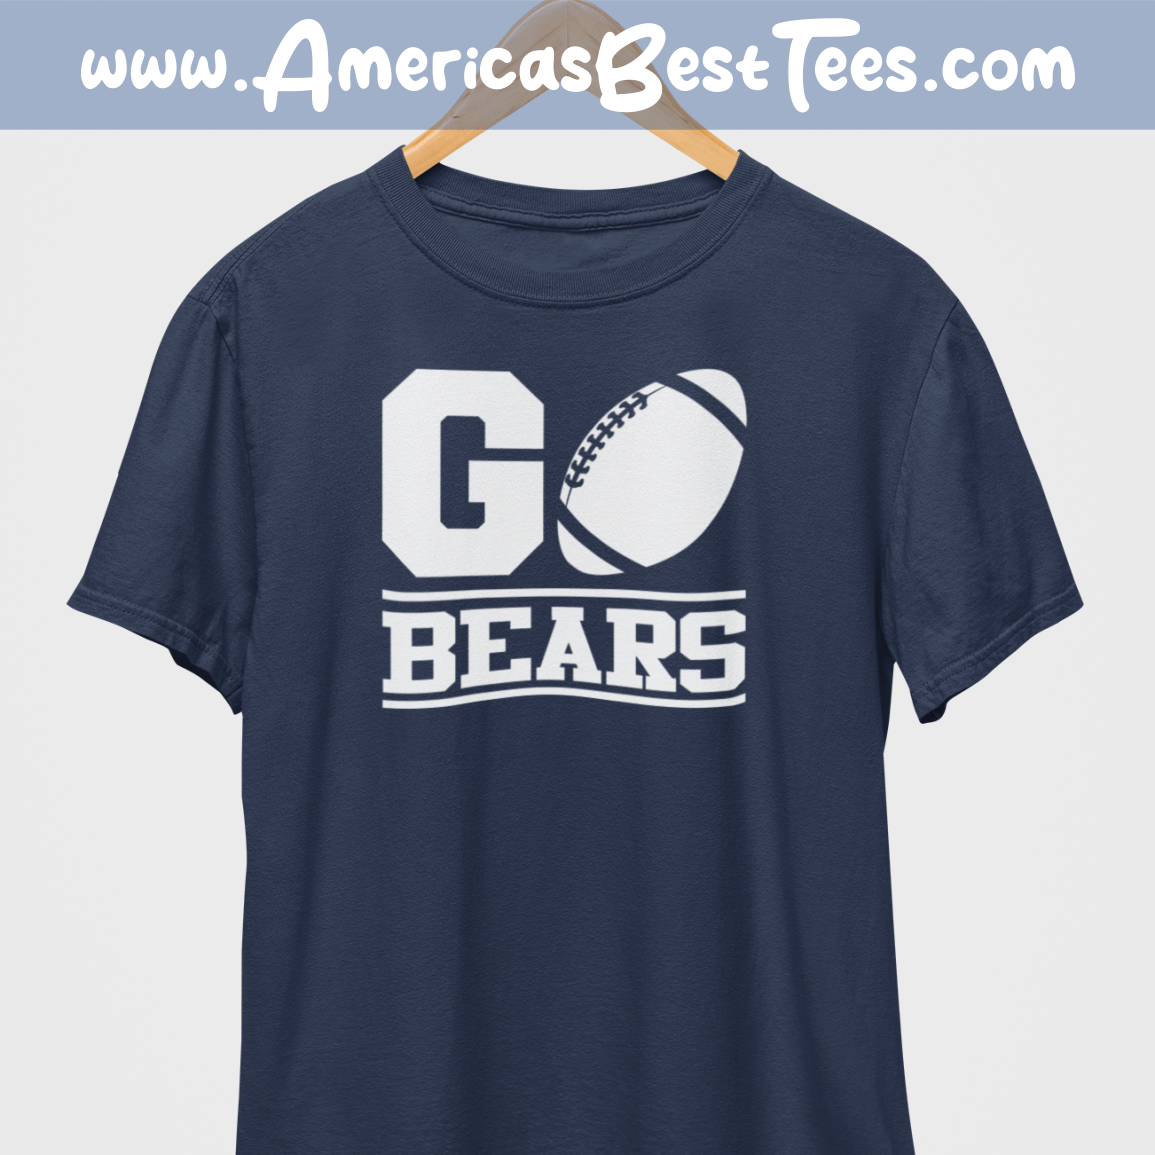 Go Bears Football White Print T-Shirt